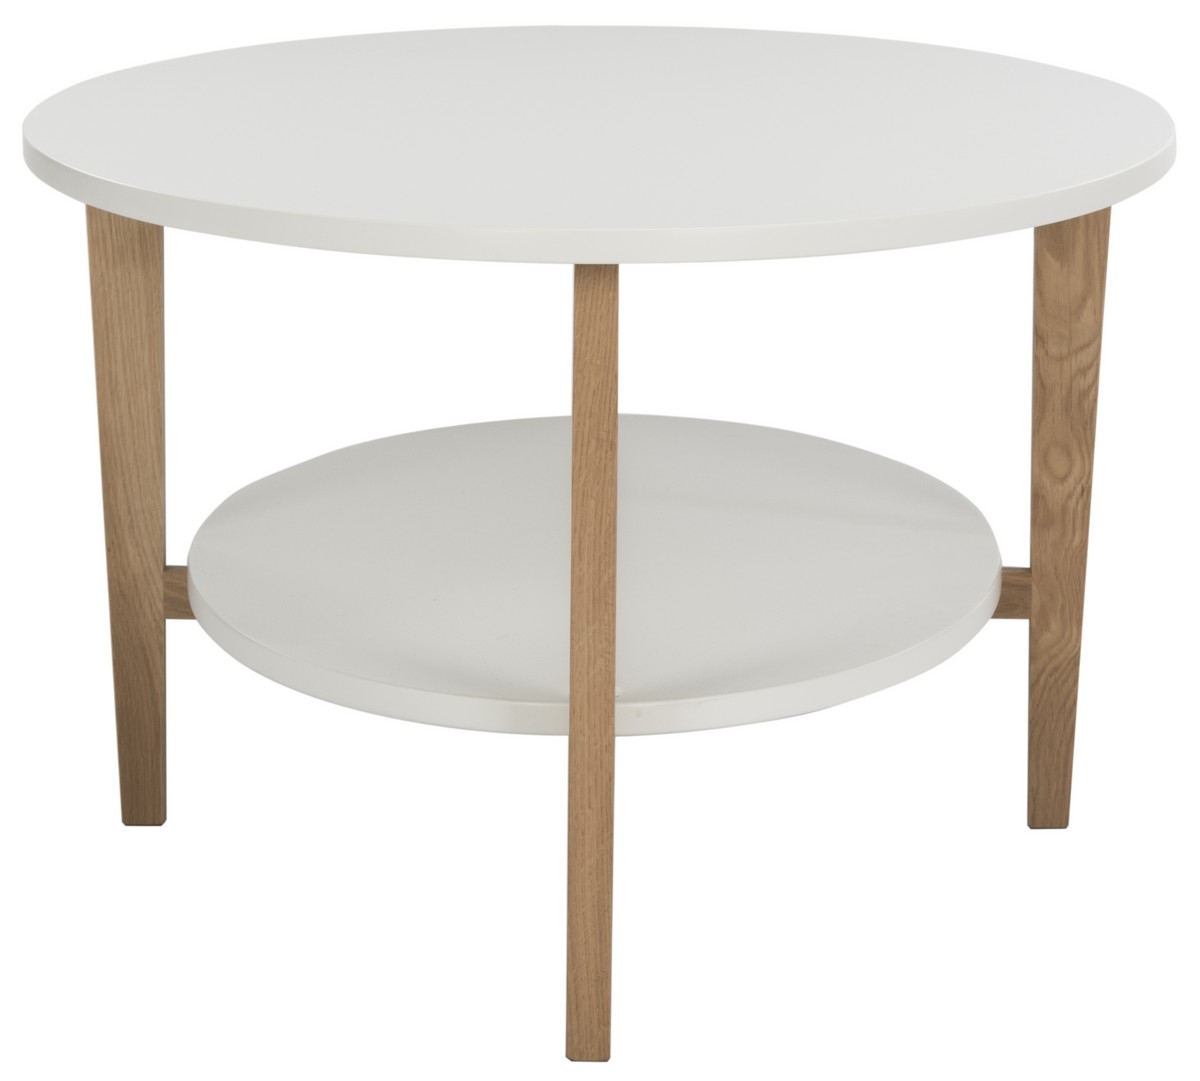 Woodruff Oval Coffee Table - White - Arlo Home - Image 1